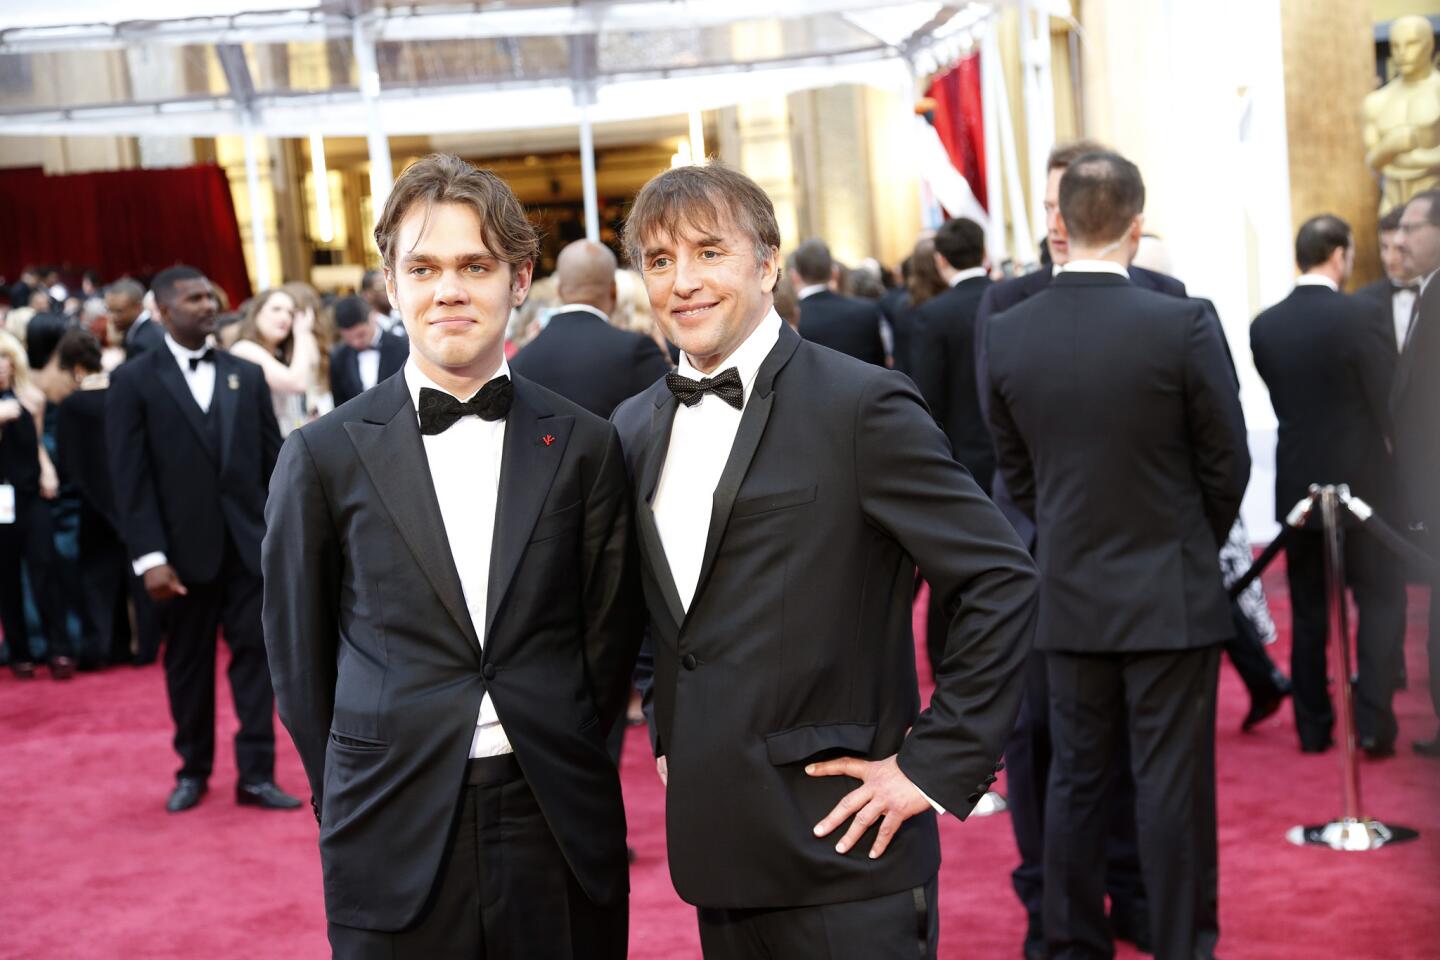 Oscars 2015 red carpet